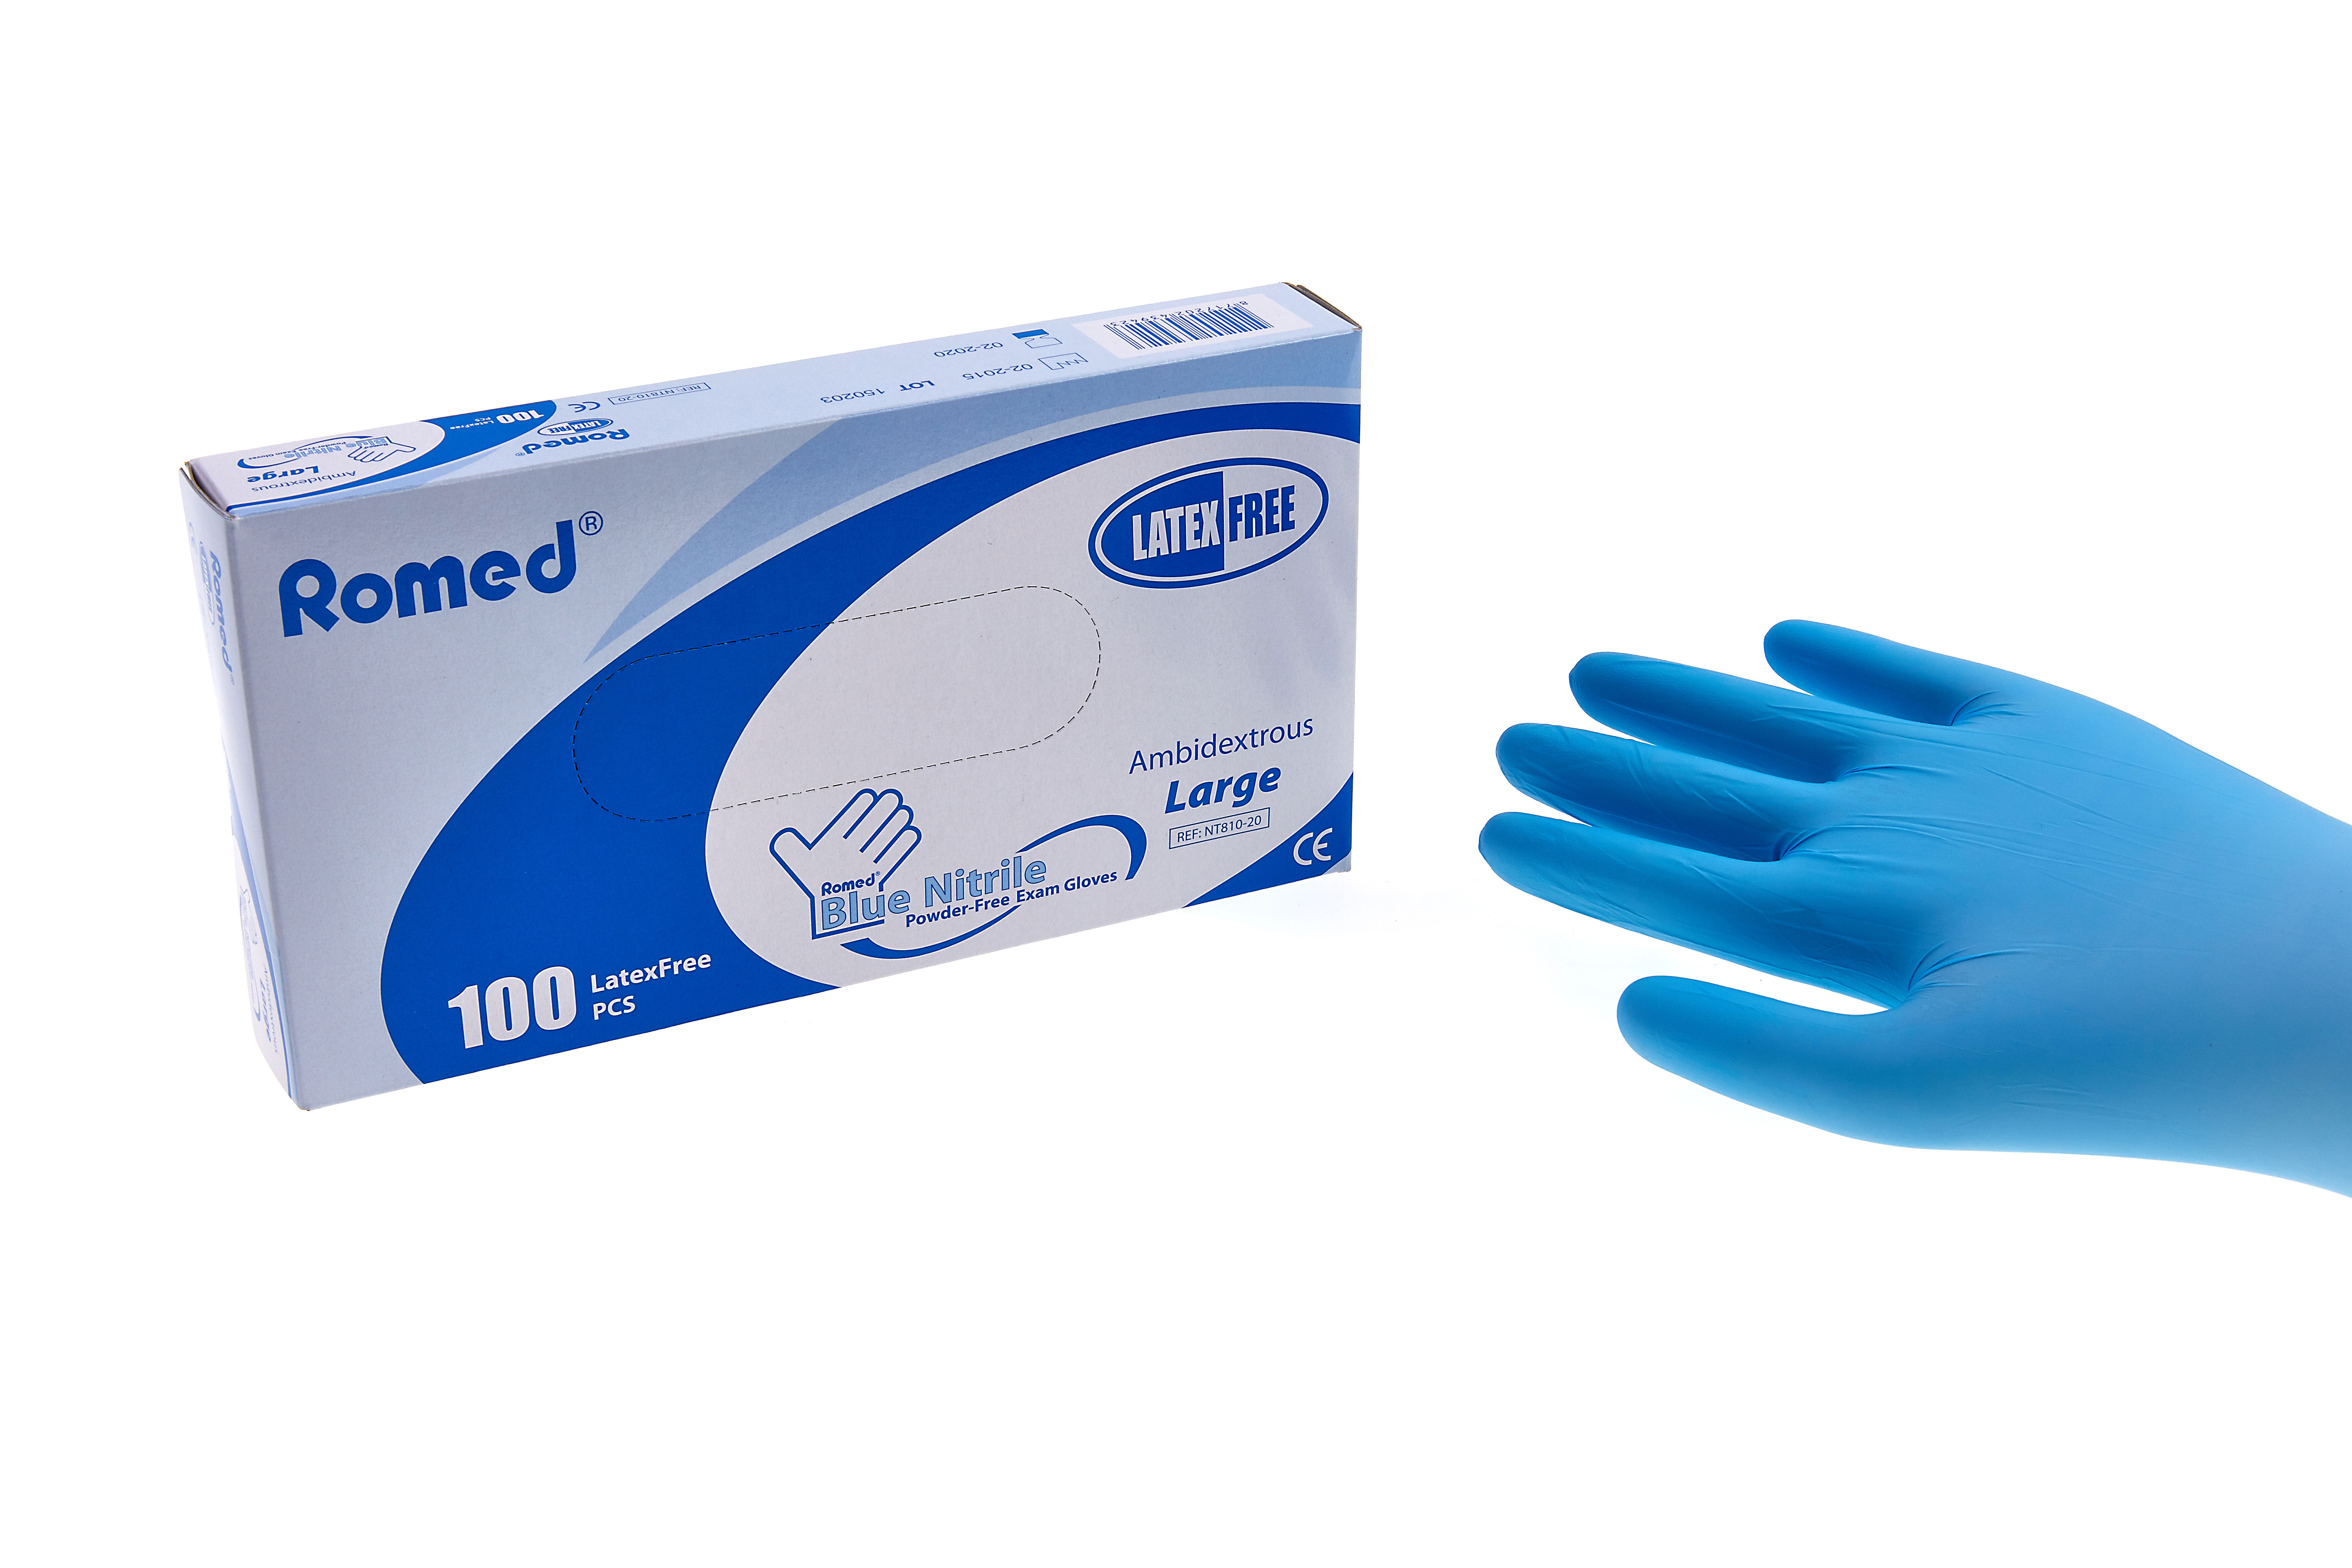 NT800-20 Romed nitrile examination gloves, non sterile, powderfree, blue, small, per 100 pcs in a dispenser box, 20 x 100 pcs = 2.000 pcs in a carton.